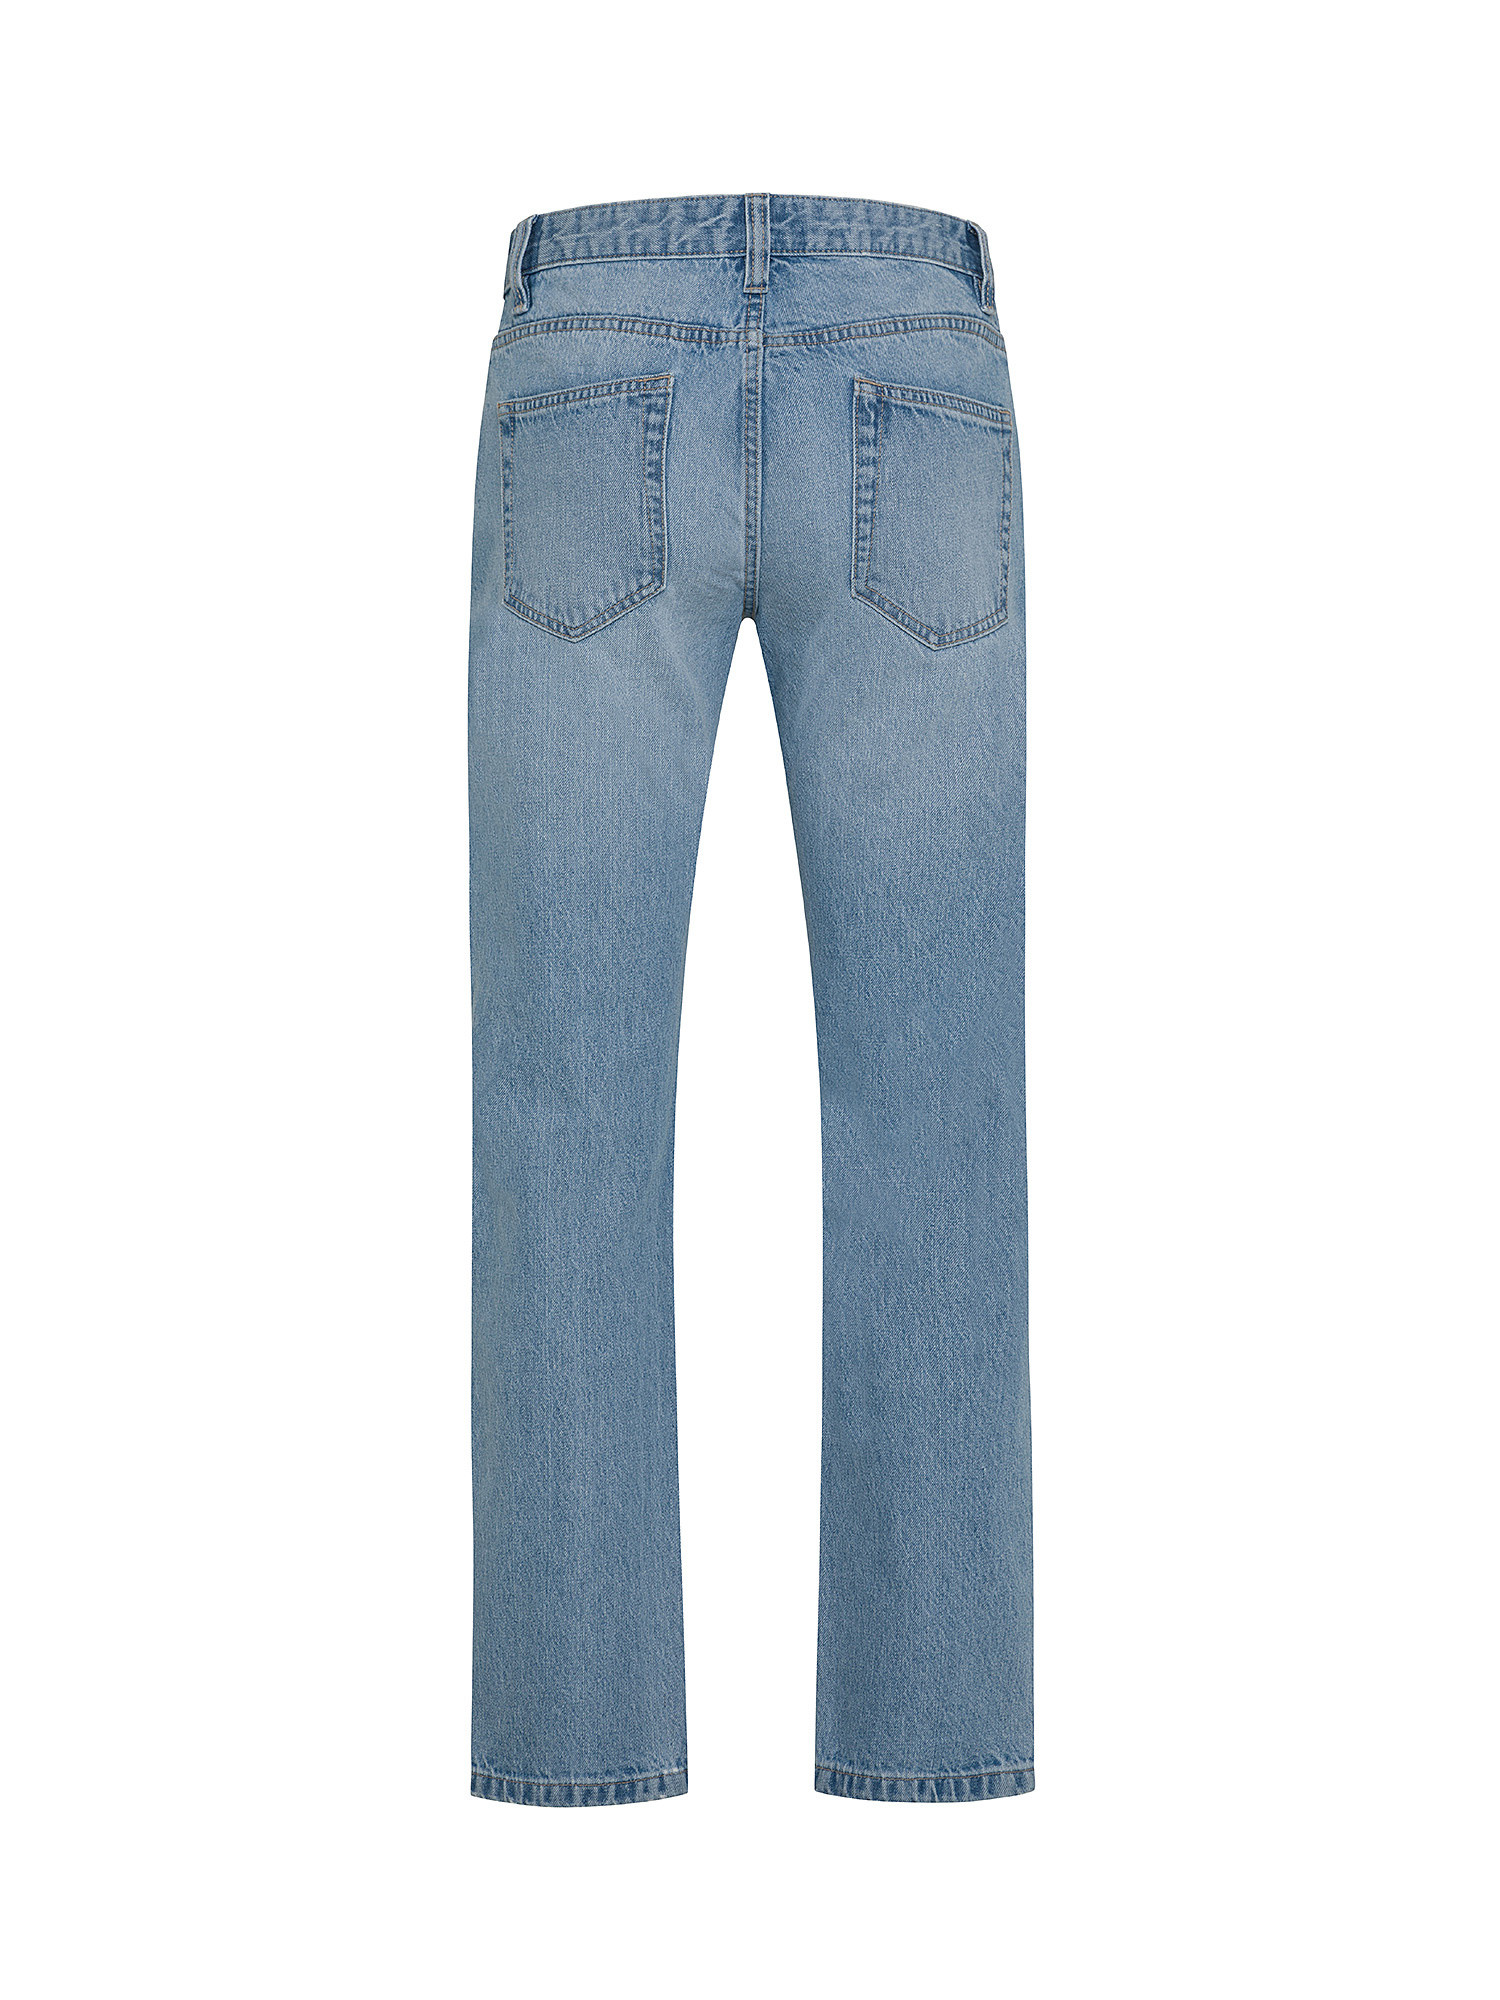 JCT - Five pocket jeans in pure cotton, Denim, large image number 1